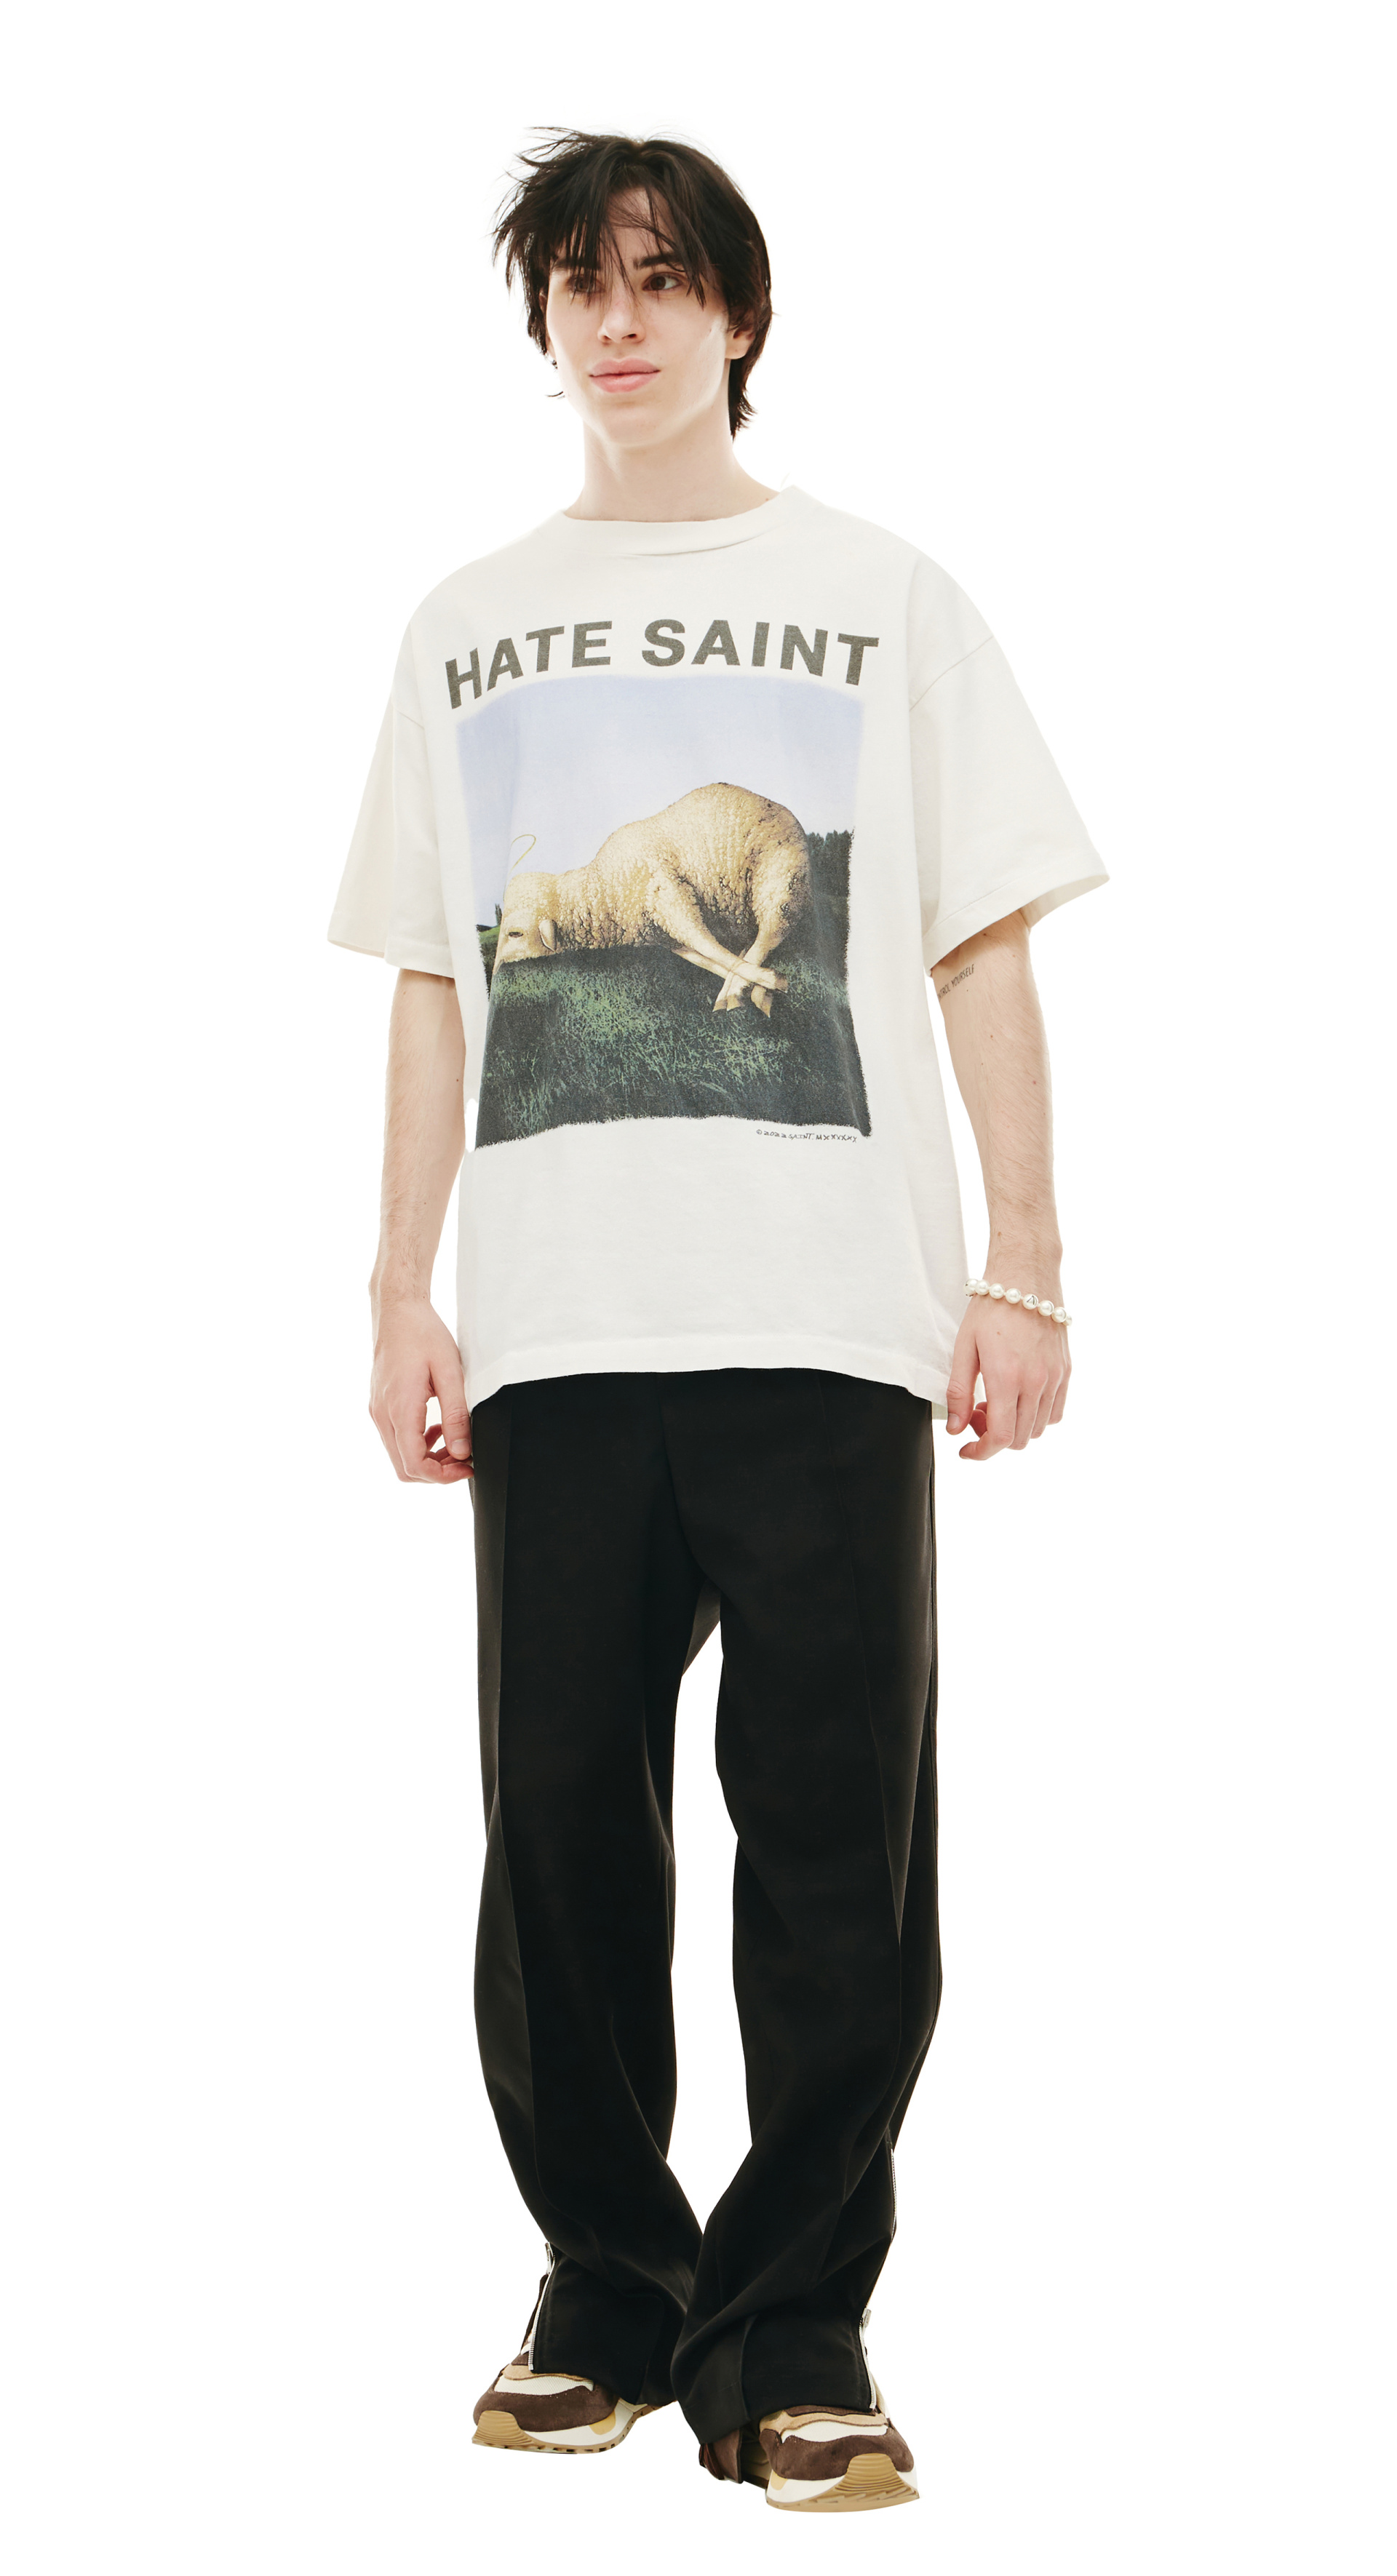 Shop Saint Michael clothing for men online at SV77